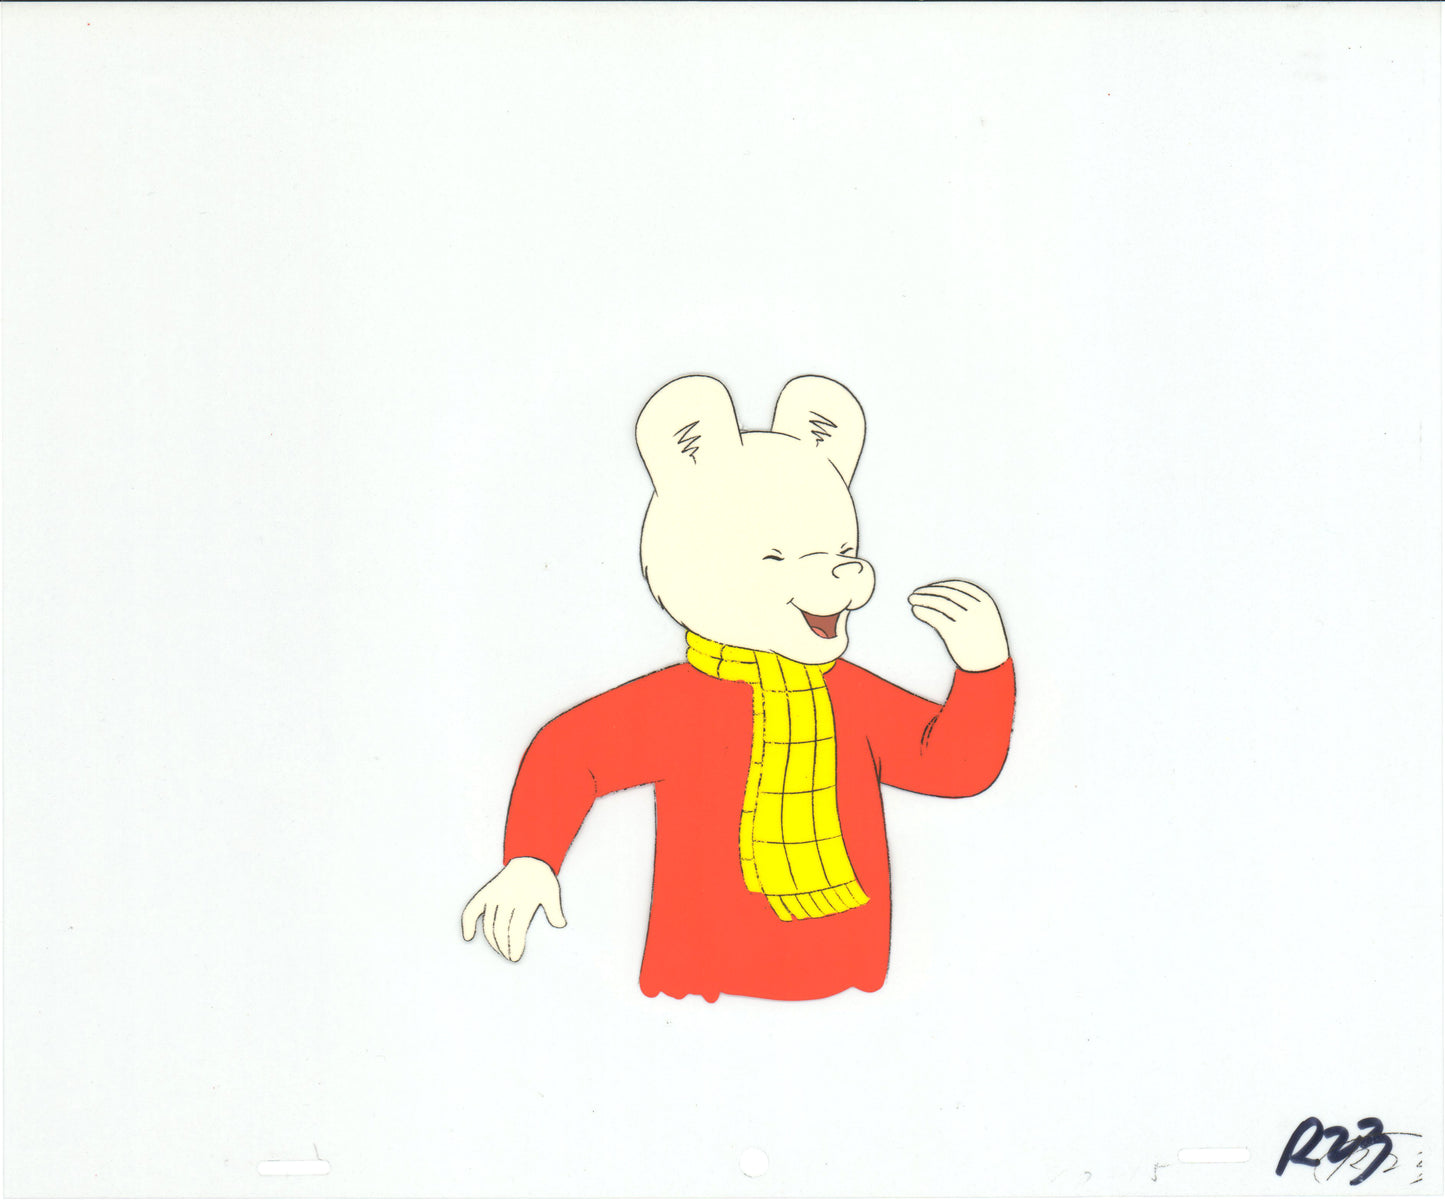 RUPERT Bear Original Production Animation Cel from the Cartoon by Nelvana Tourtel Animation 1990s 8-200